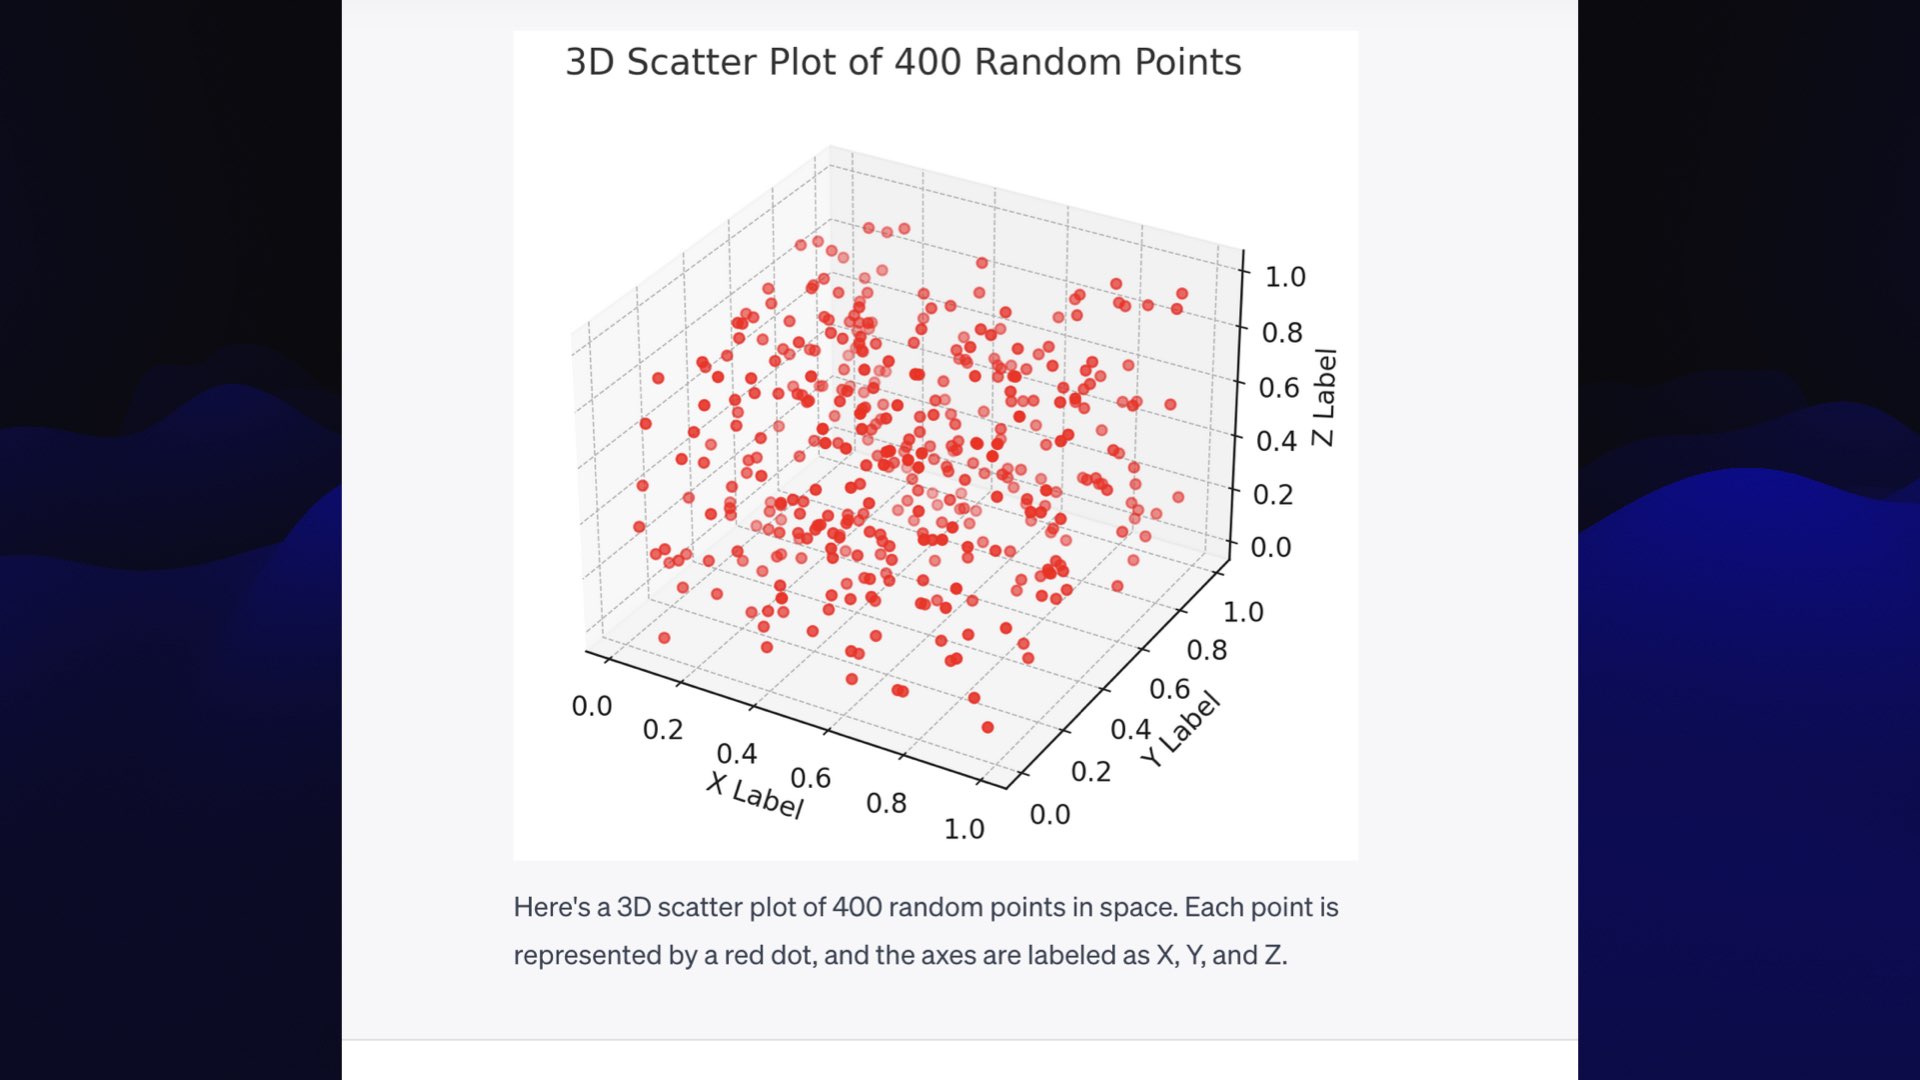 A 3D chart labelled "3D Scatter Plot of 400 Random Points".